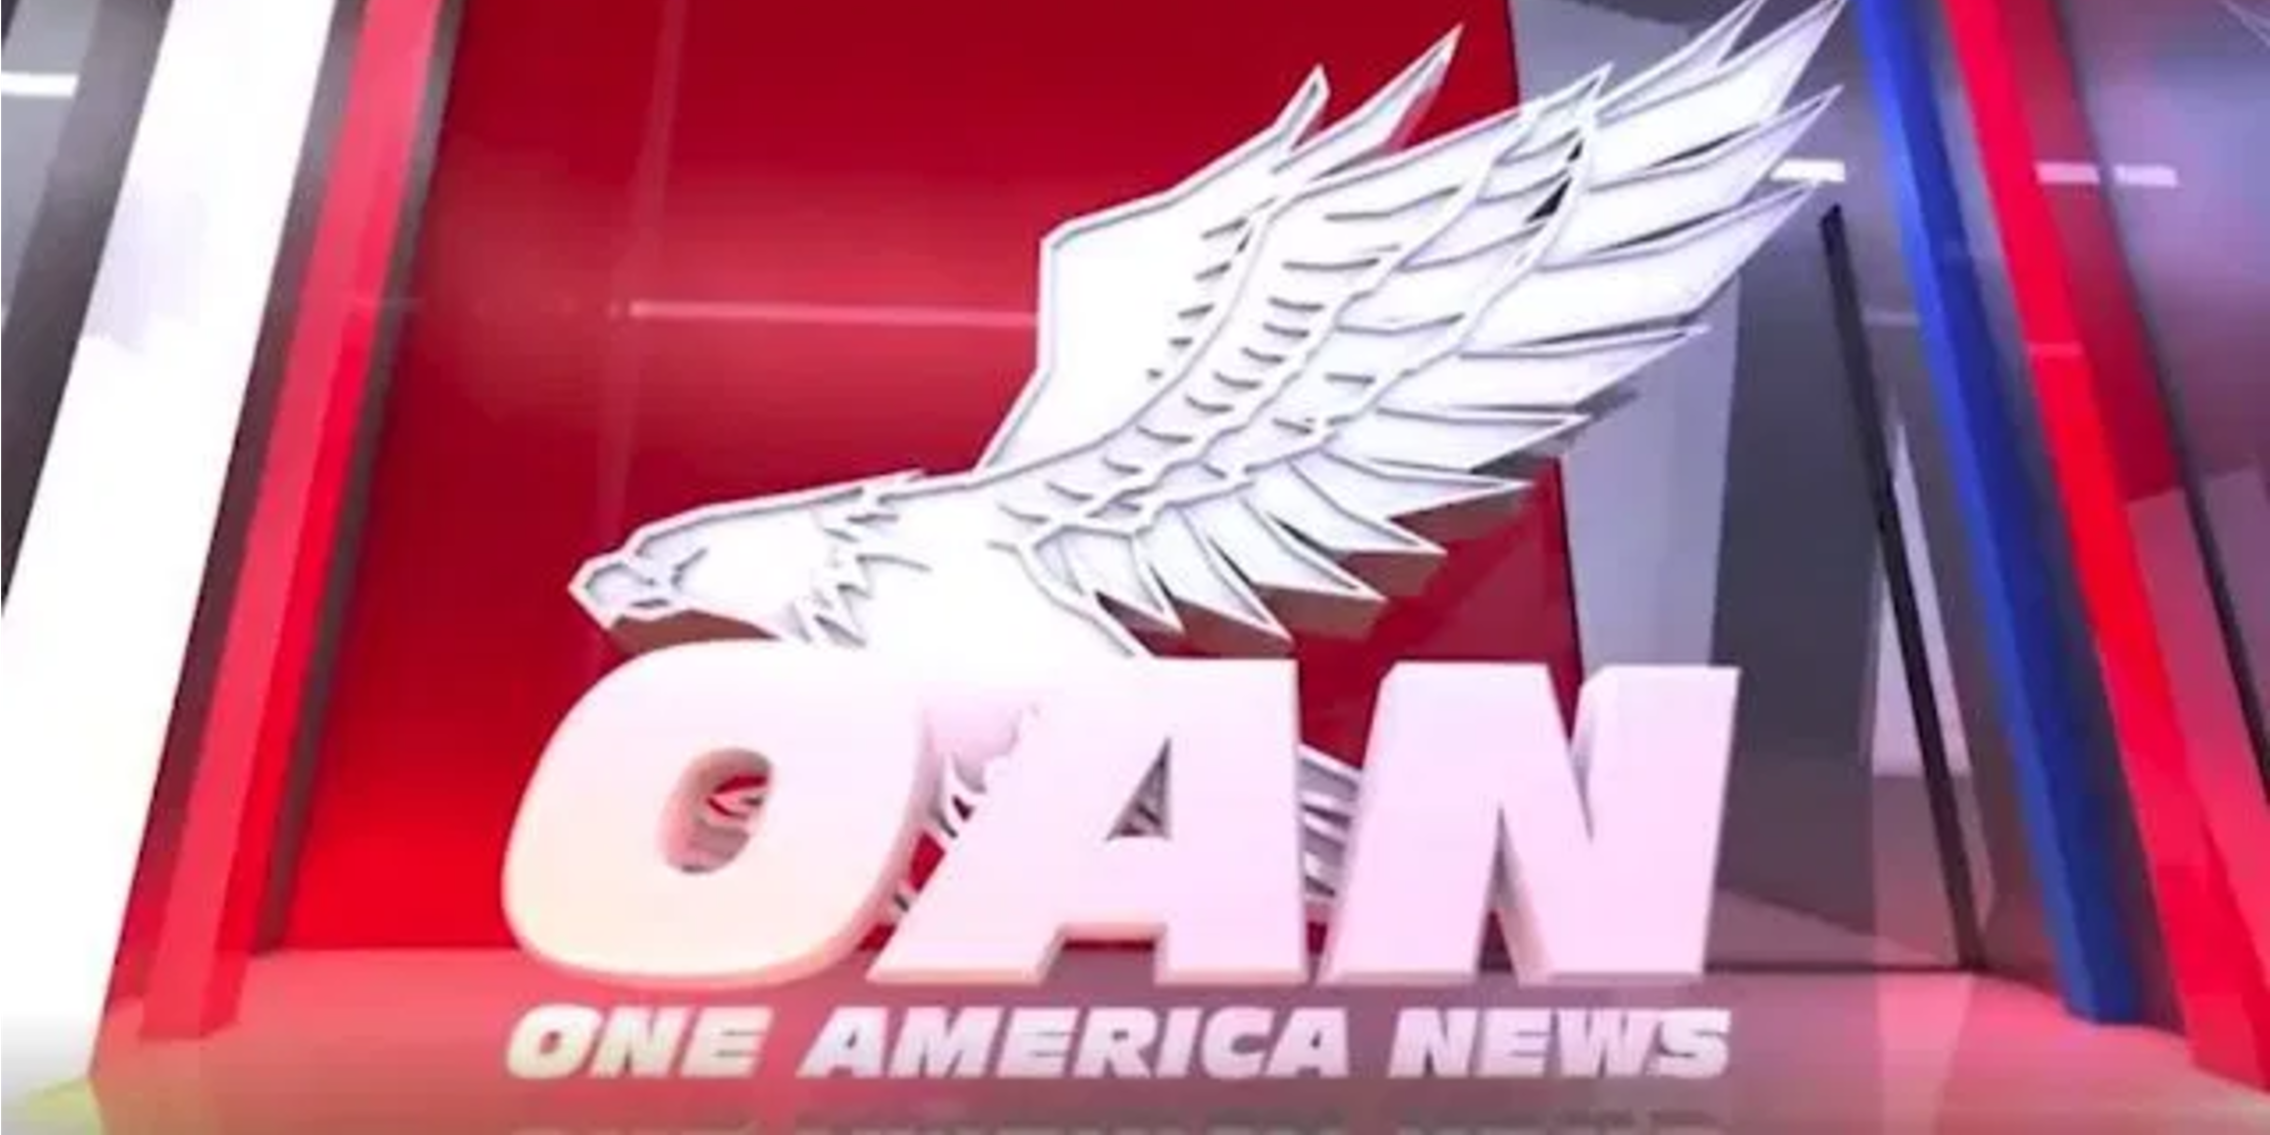 The One America News Network logo